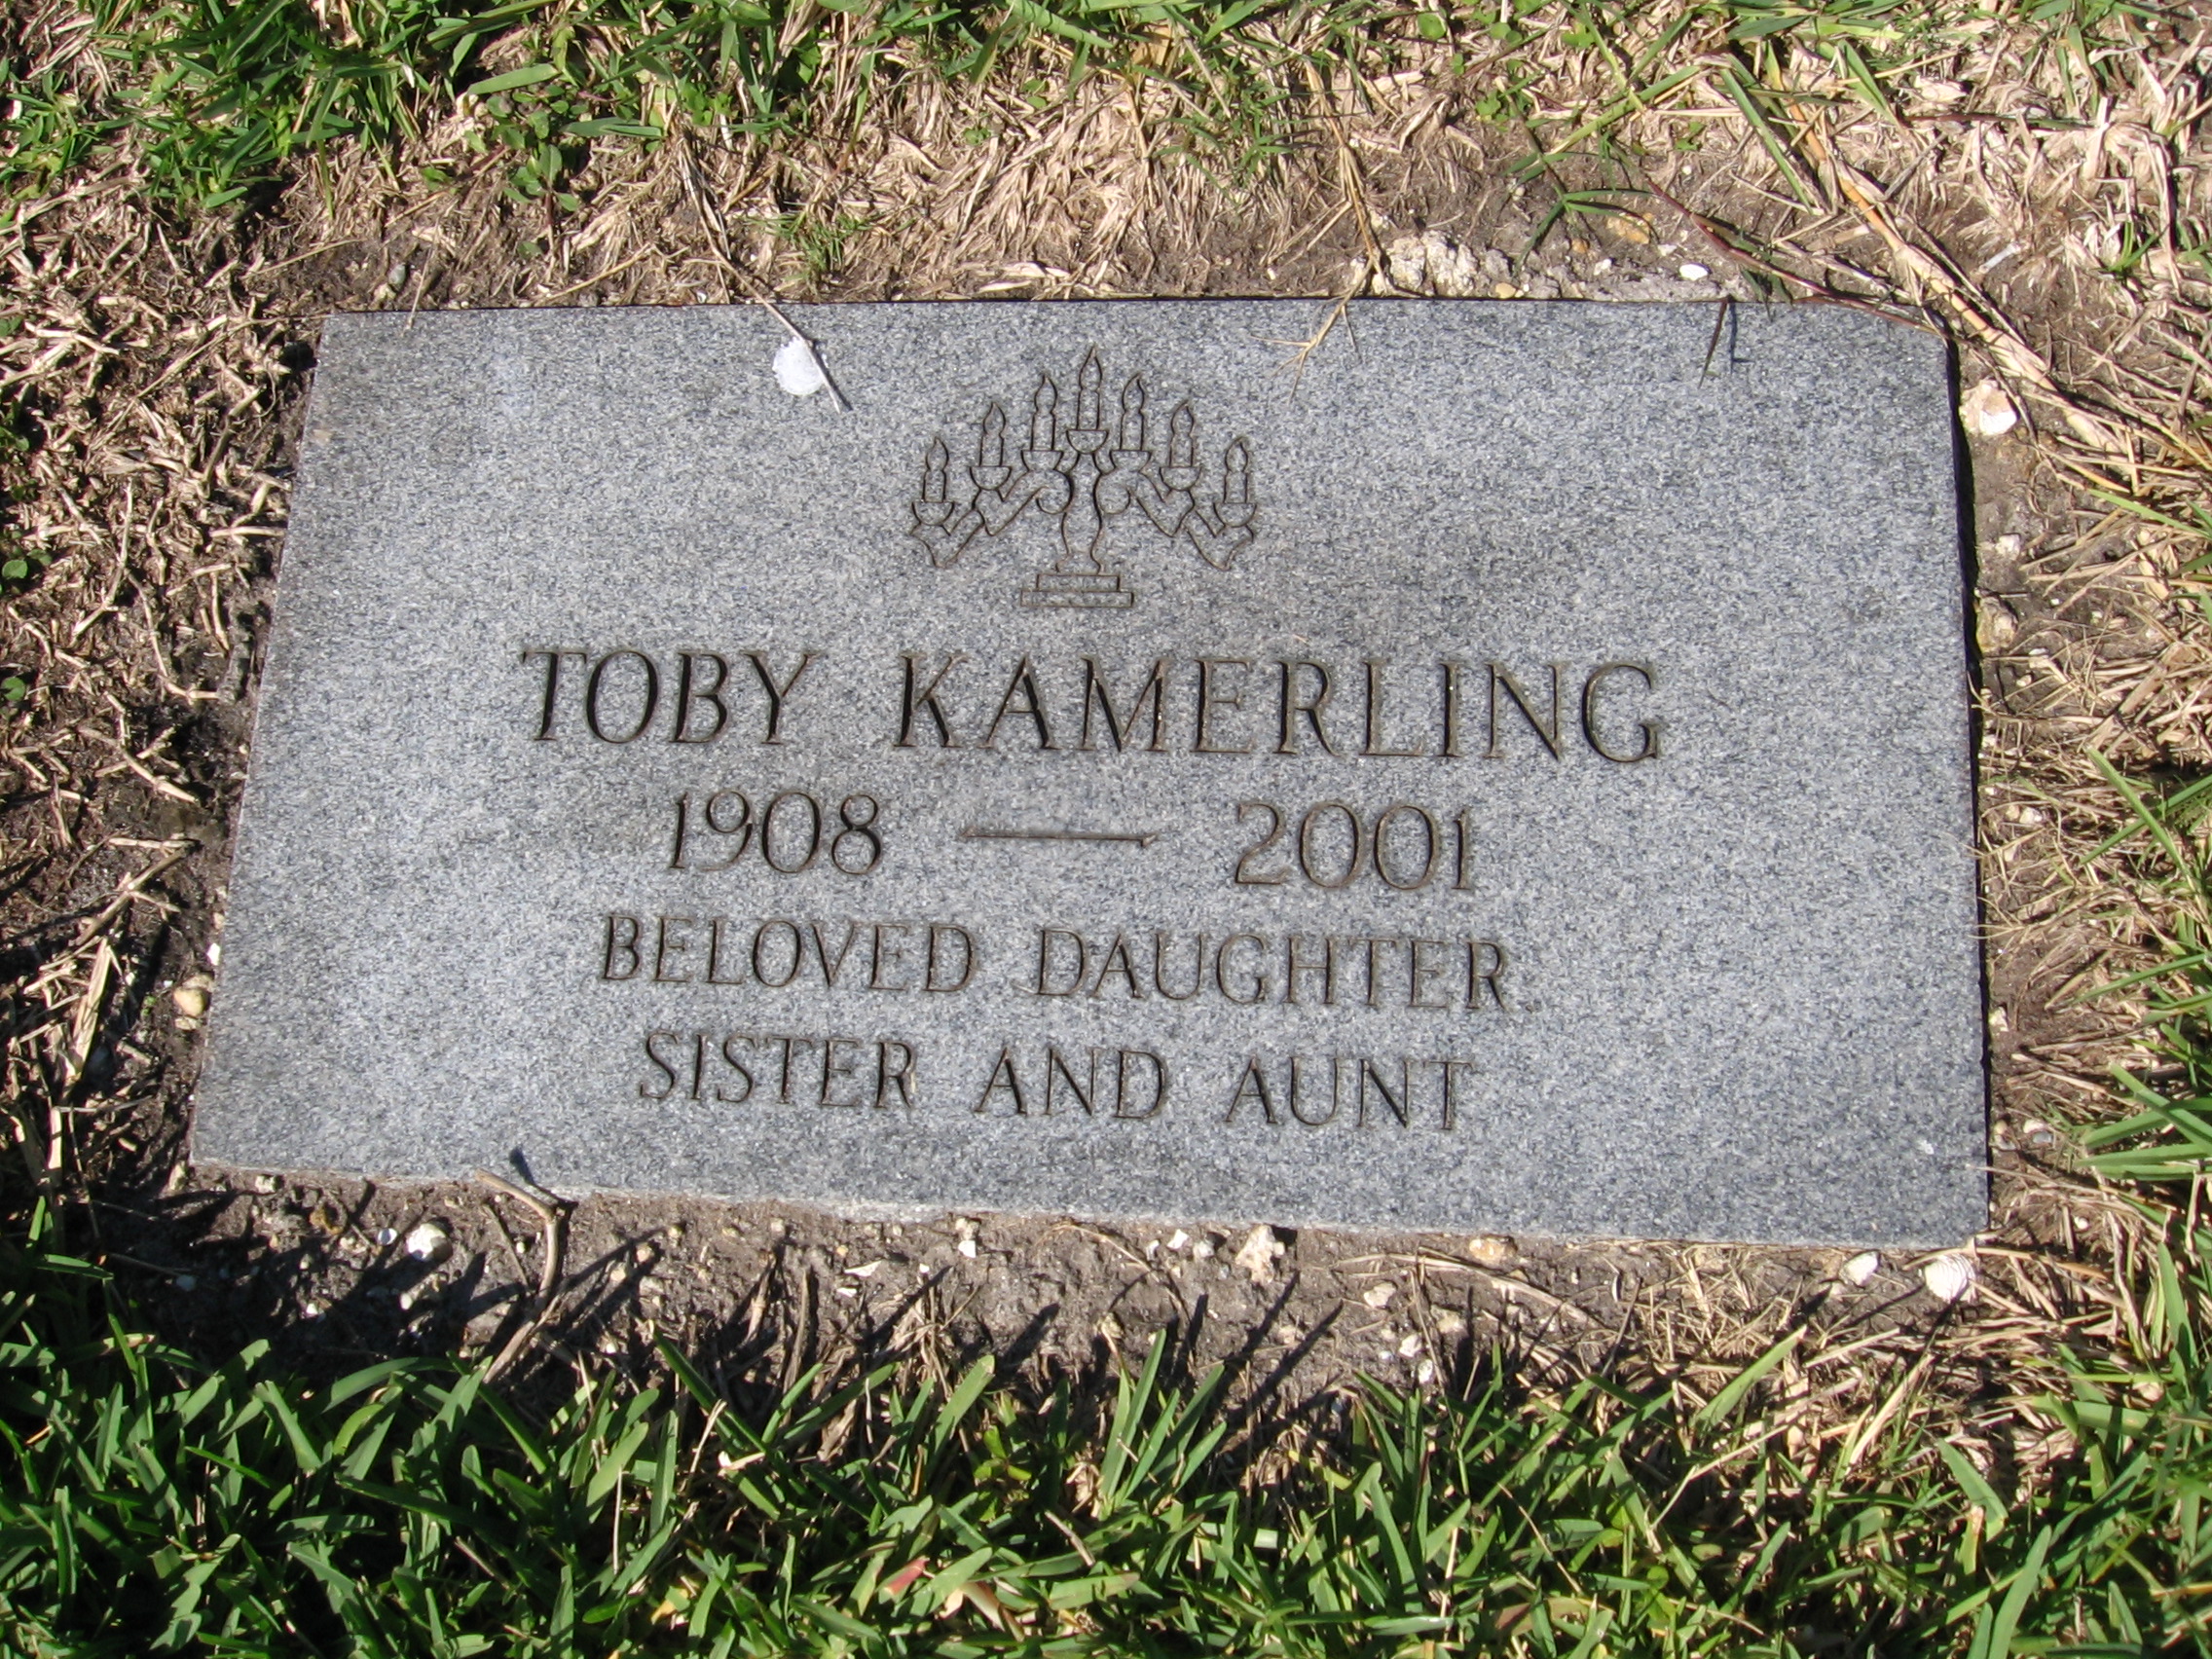 Toby Kamerling